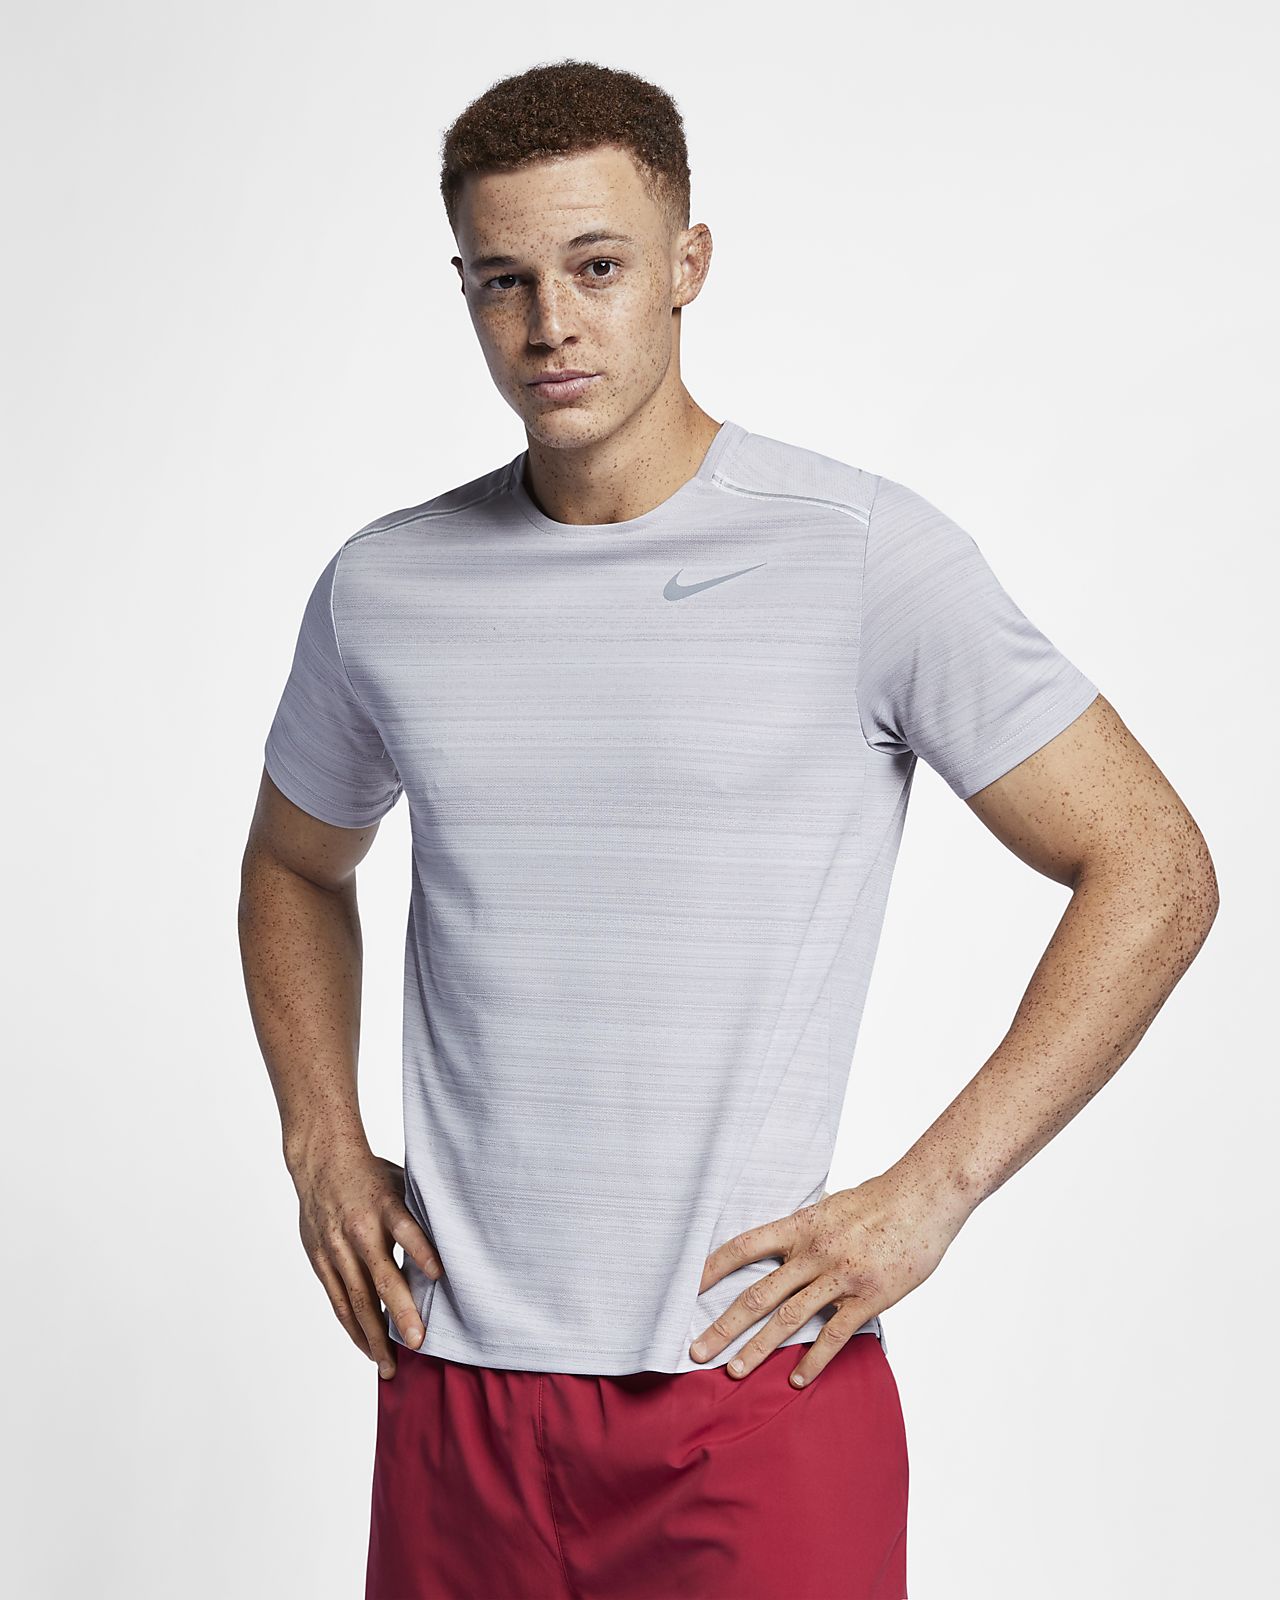 Nike Athletic Cut T Shirt Size Chart